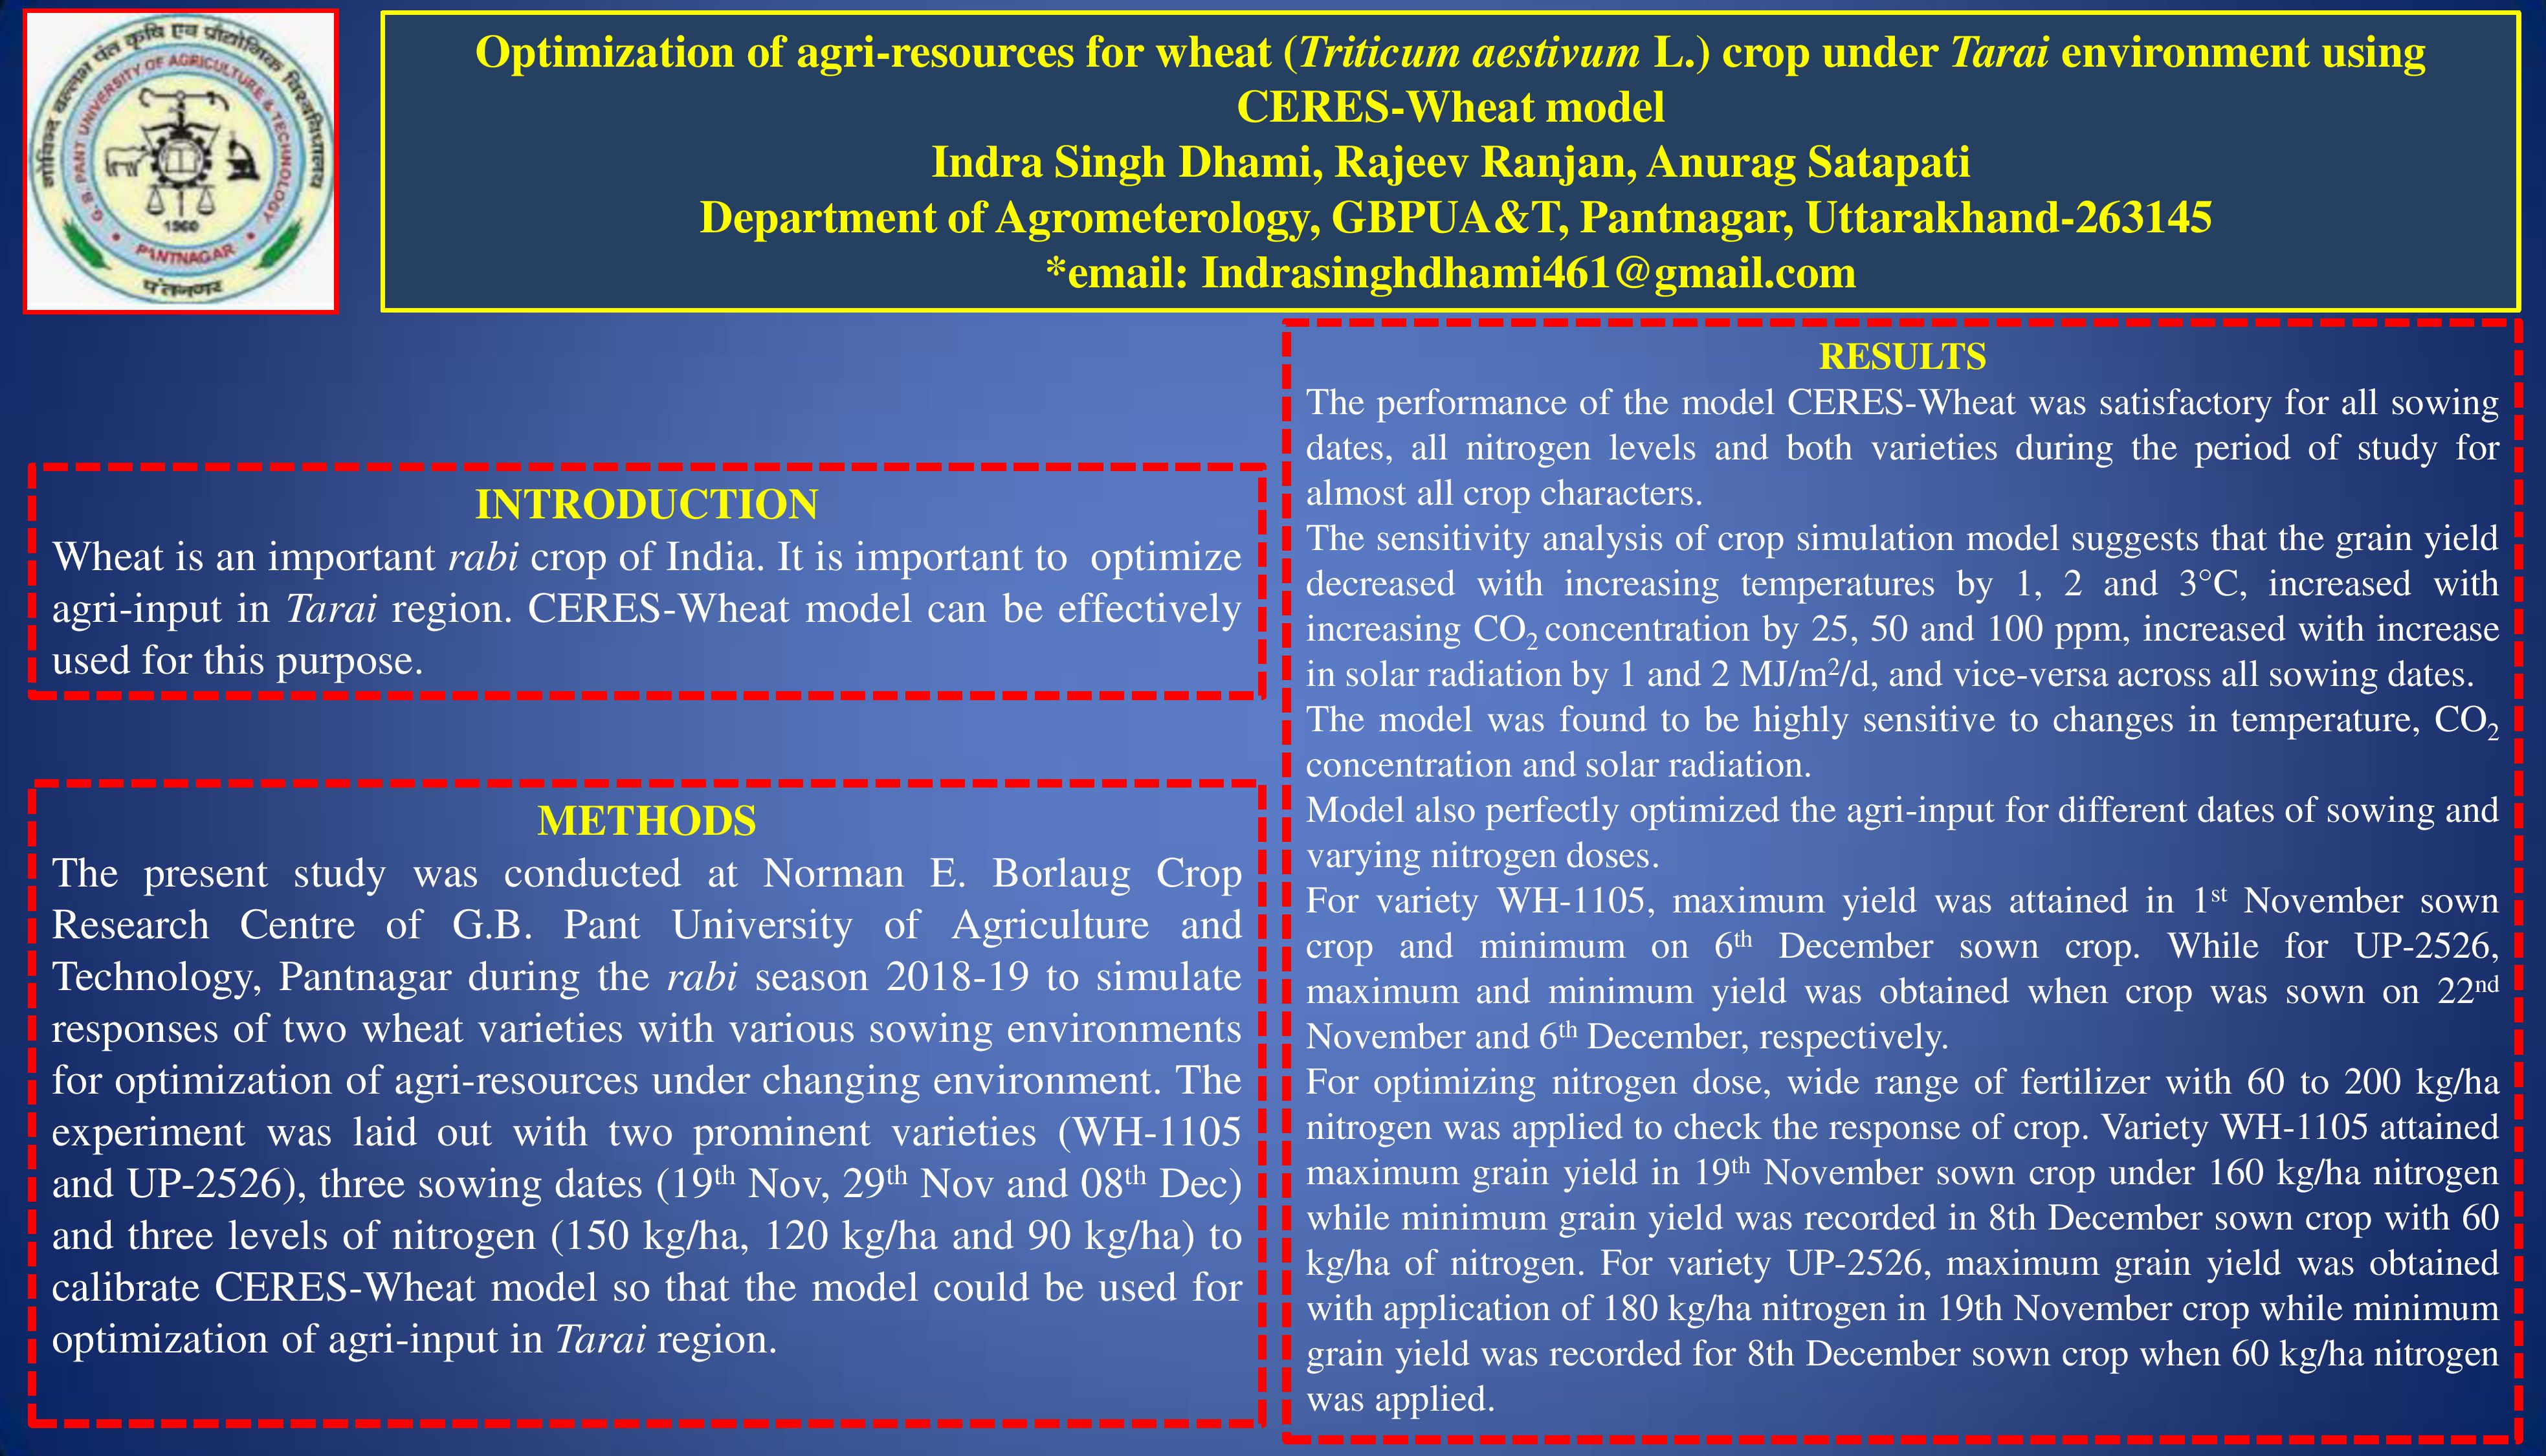 Optimization if agri-resource for wheat  under Tarai Environment using CERES- Wheat model